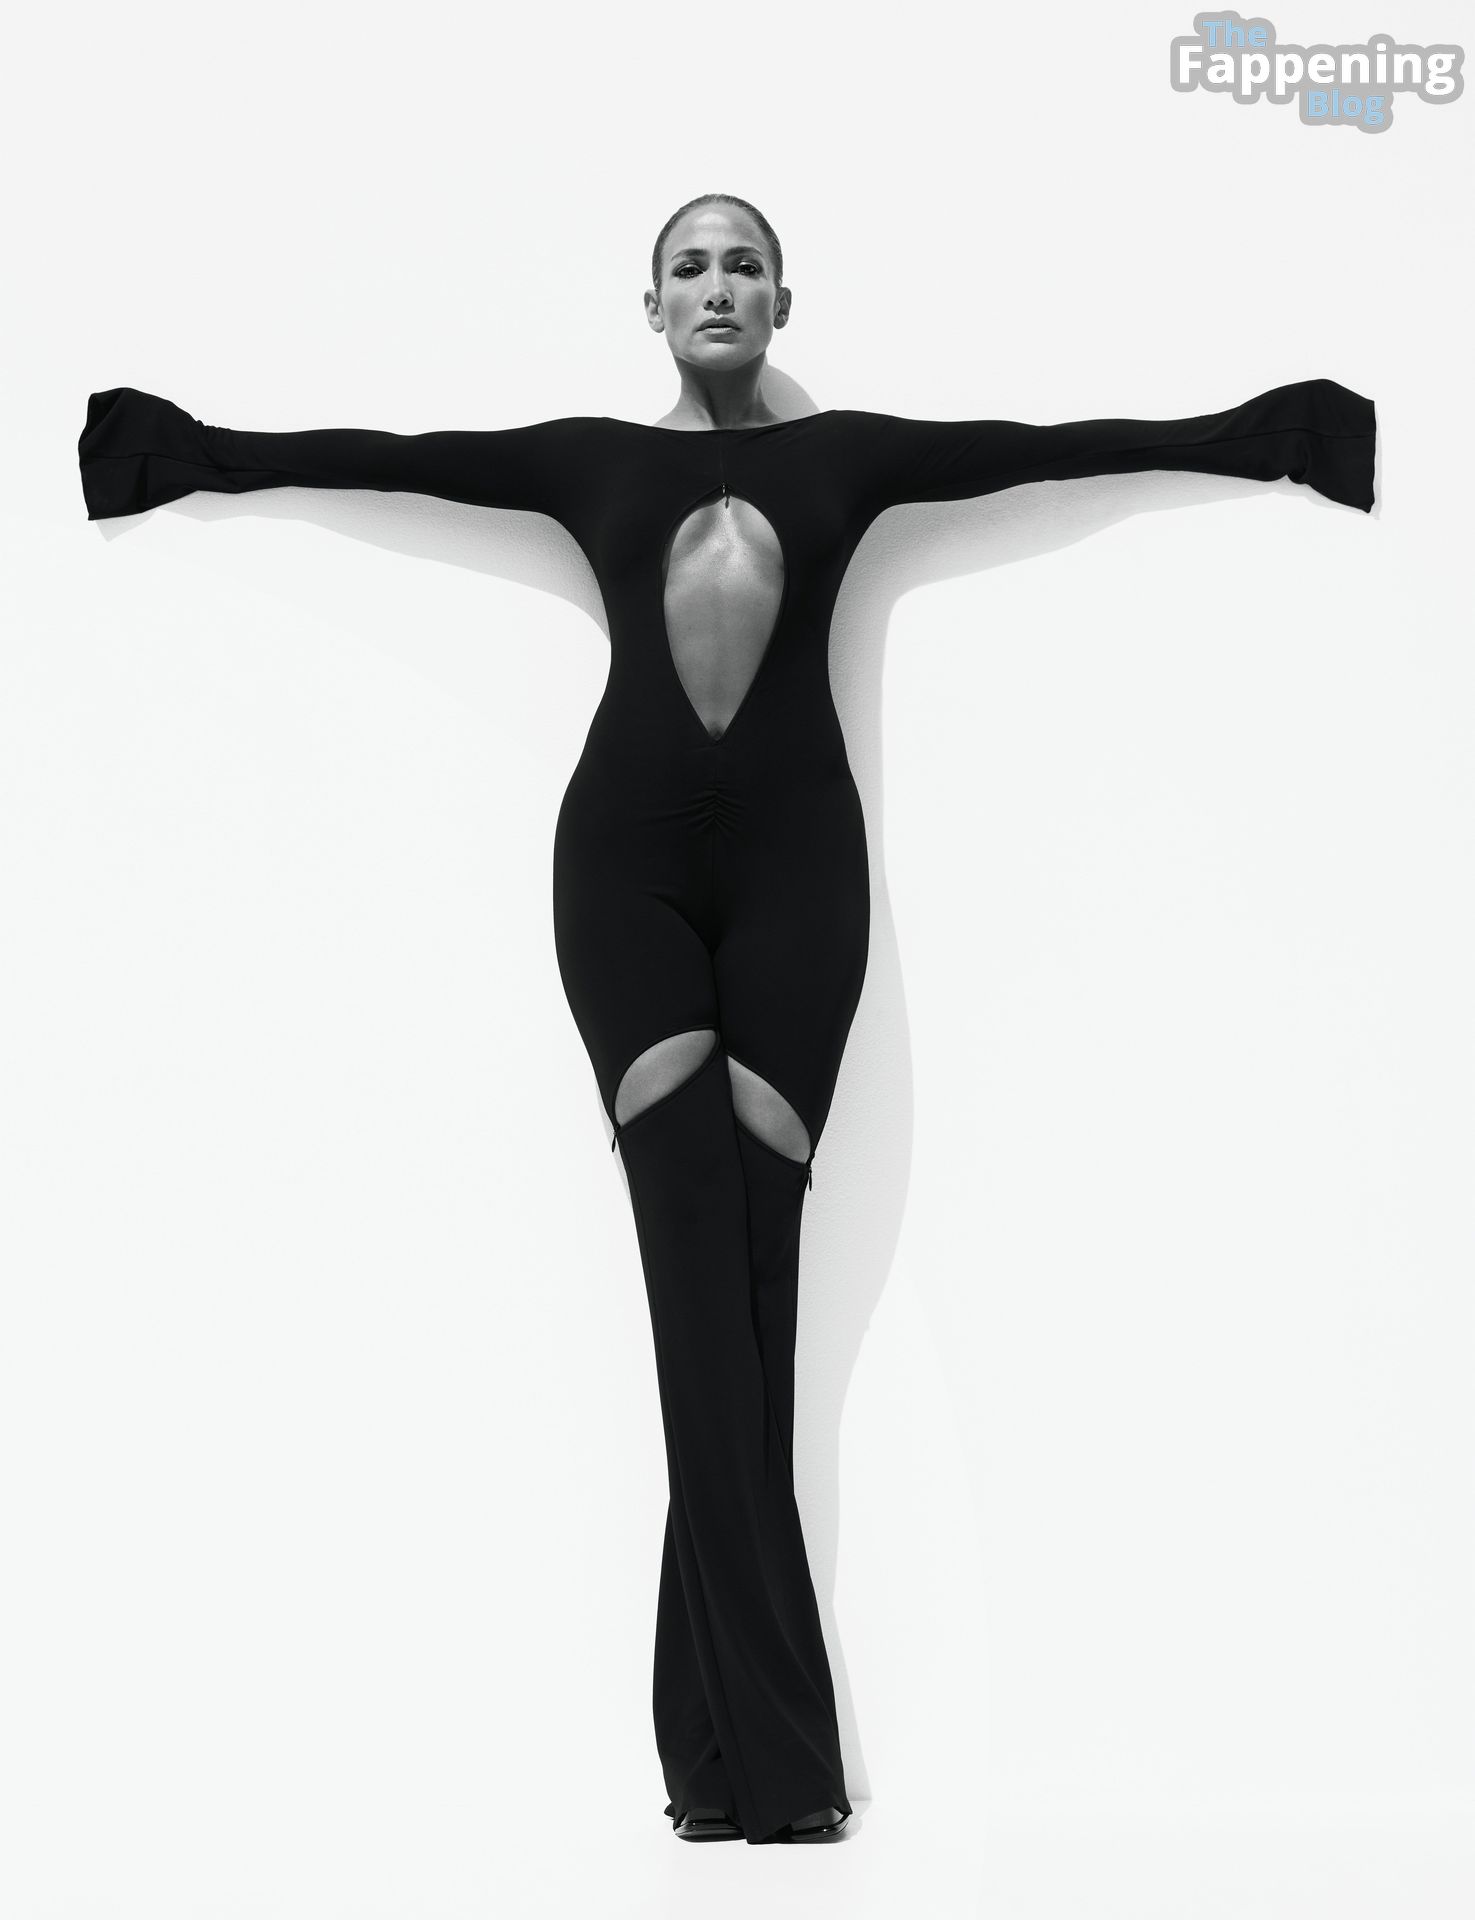 Jennifer-Lopez-Sexy-3-The-Fappening-Blog-1.jpg